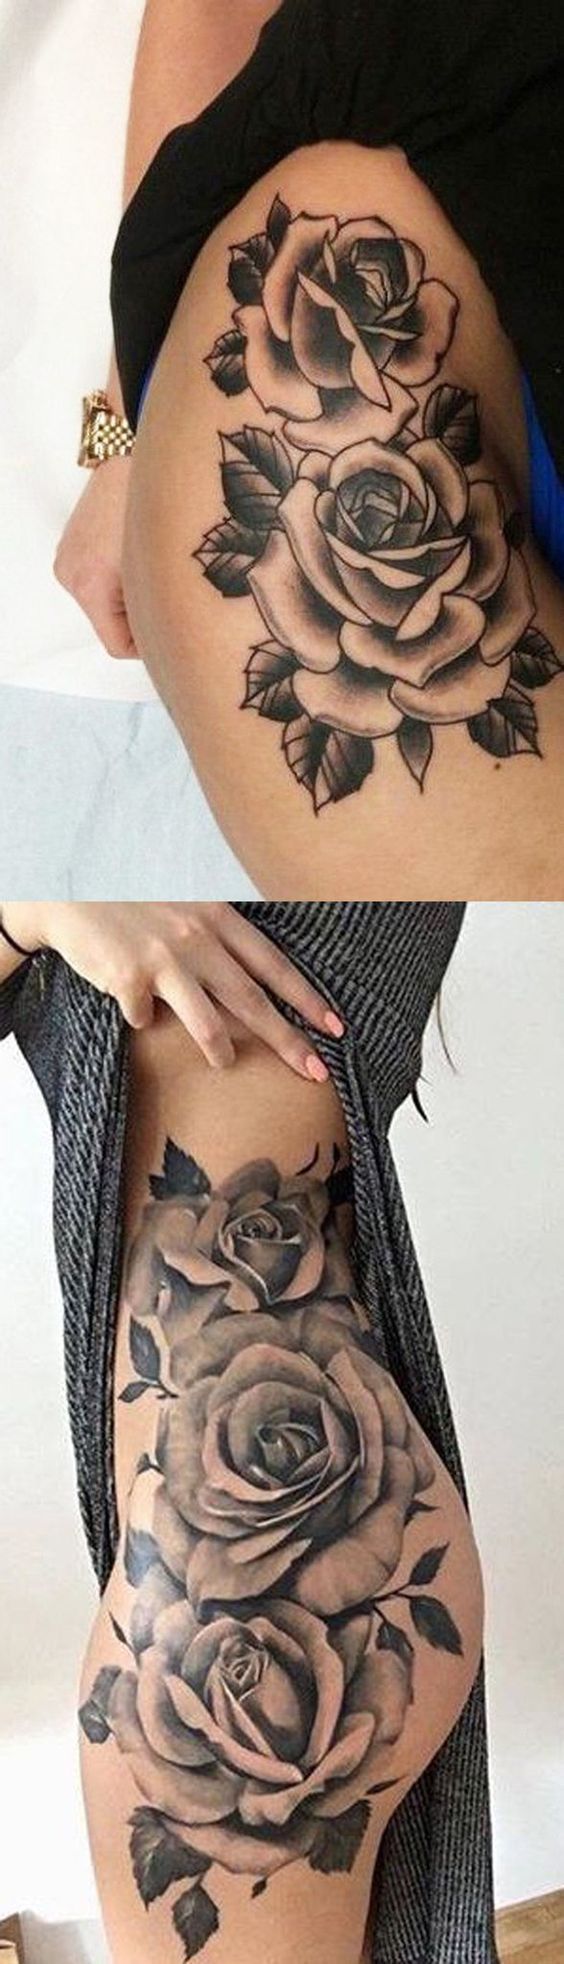 Rose Thigh Tattoo Ideas at MyBodiArt.com – Black and White Leg Hip Floral Flower Tatt